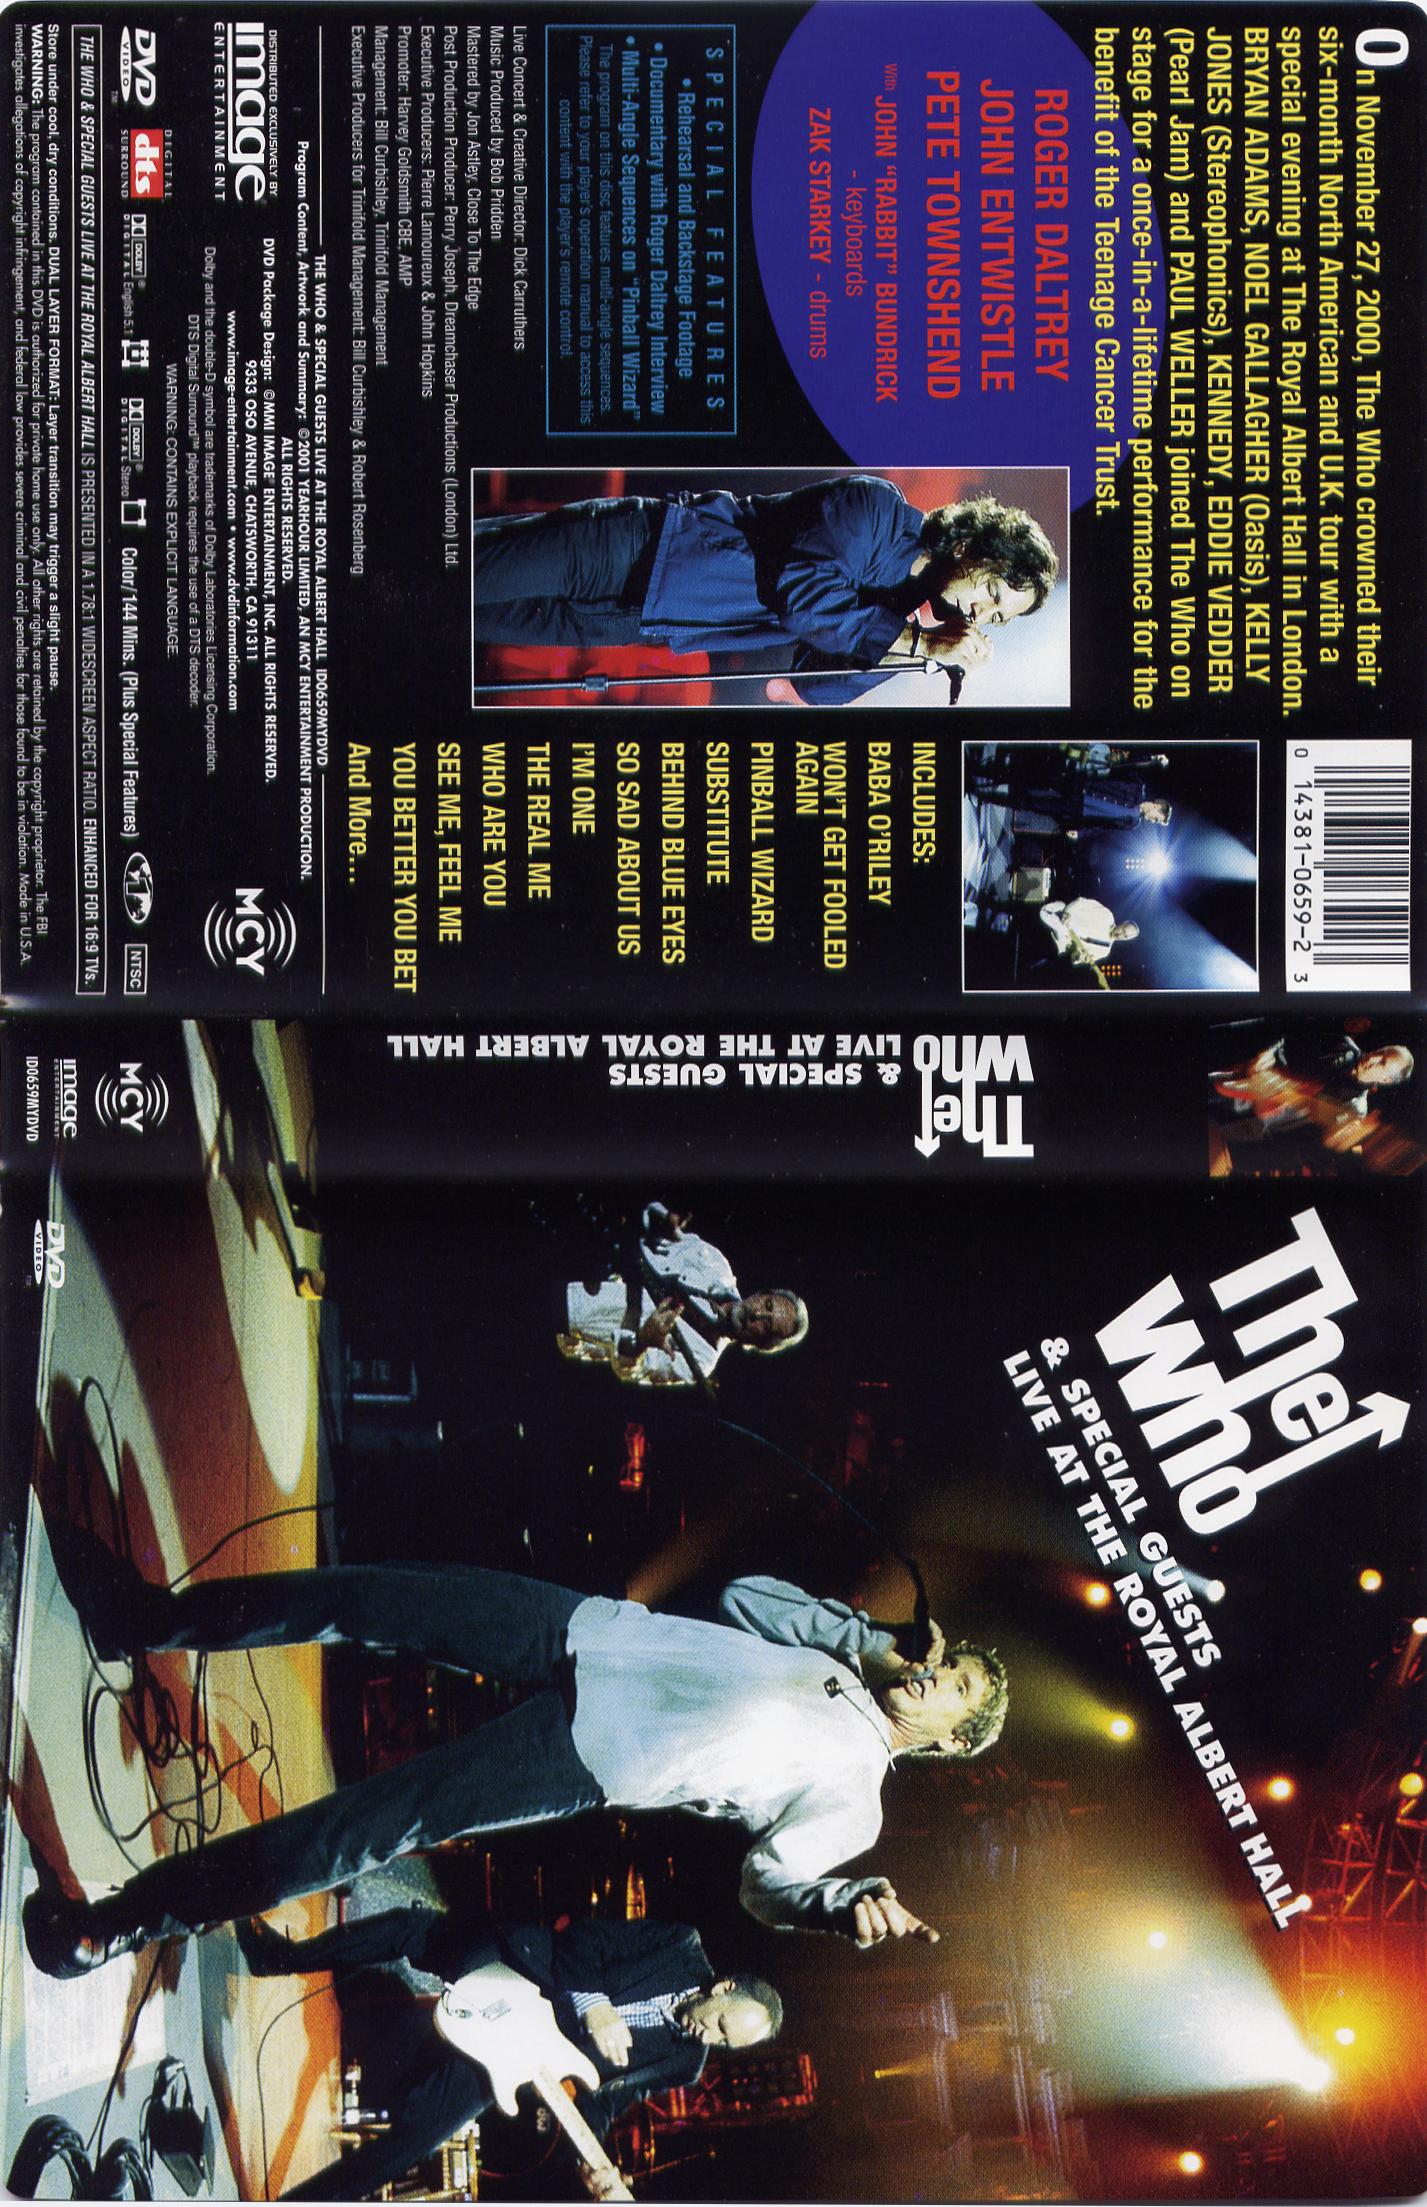 The Who - Live at the Royal Albert Hall - DVD